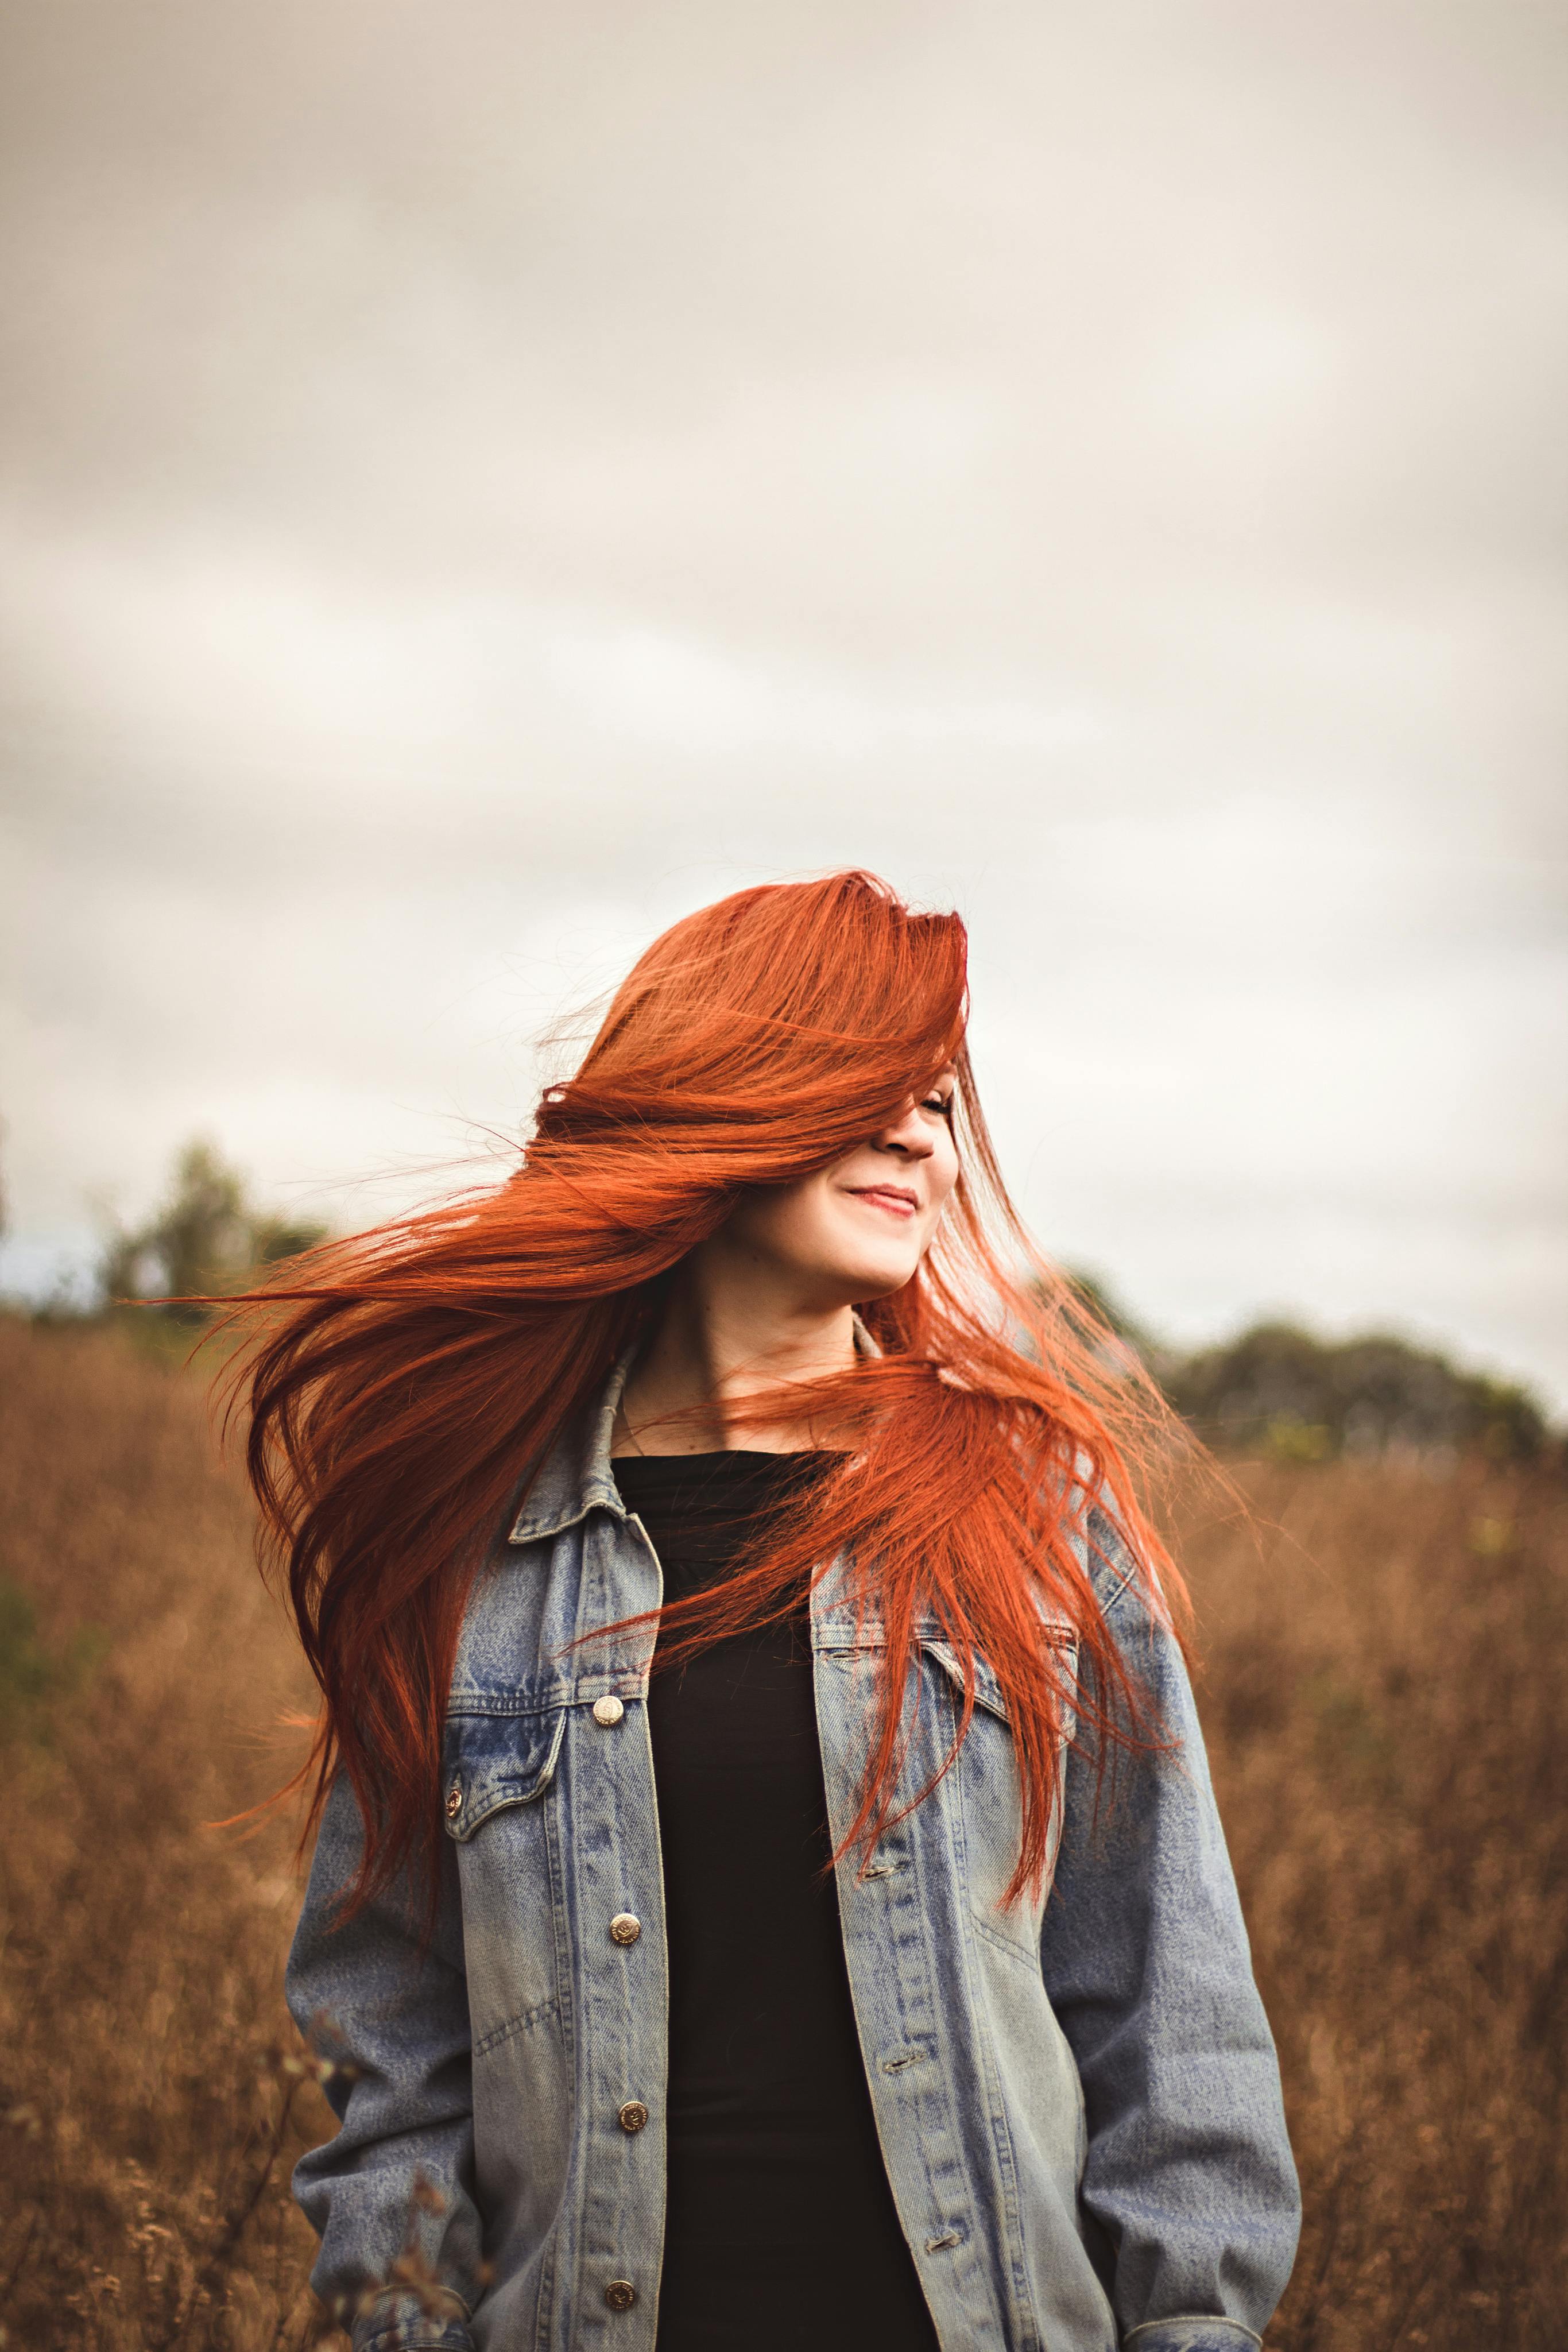 Photorealistic Beautiful Red Hair Perfect Woman 1 by arrojado on DeviantArt